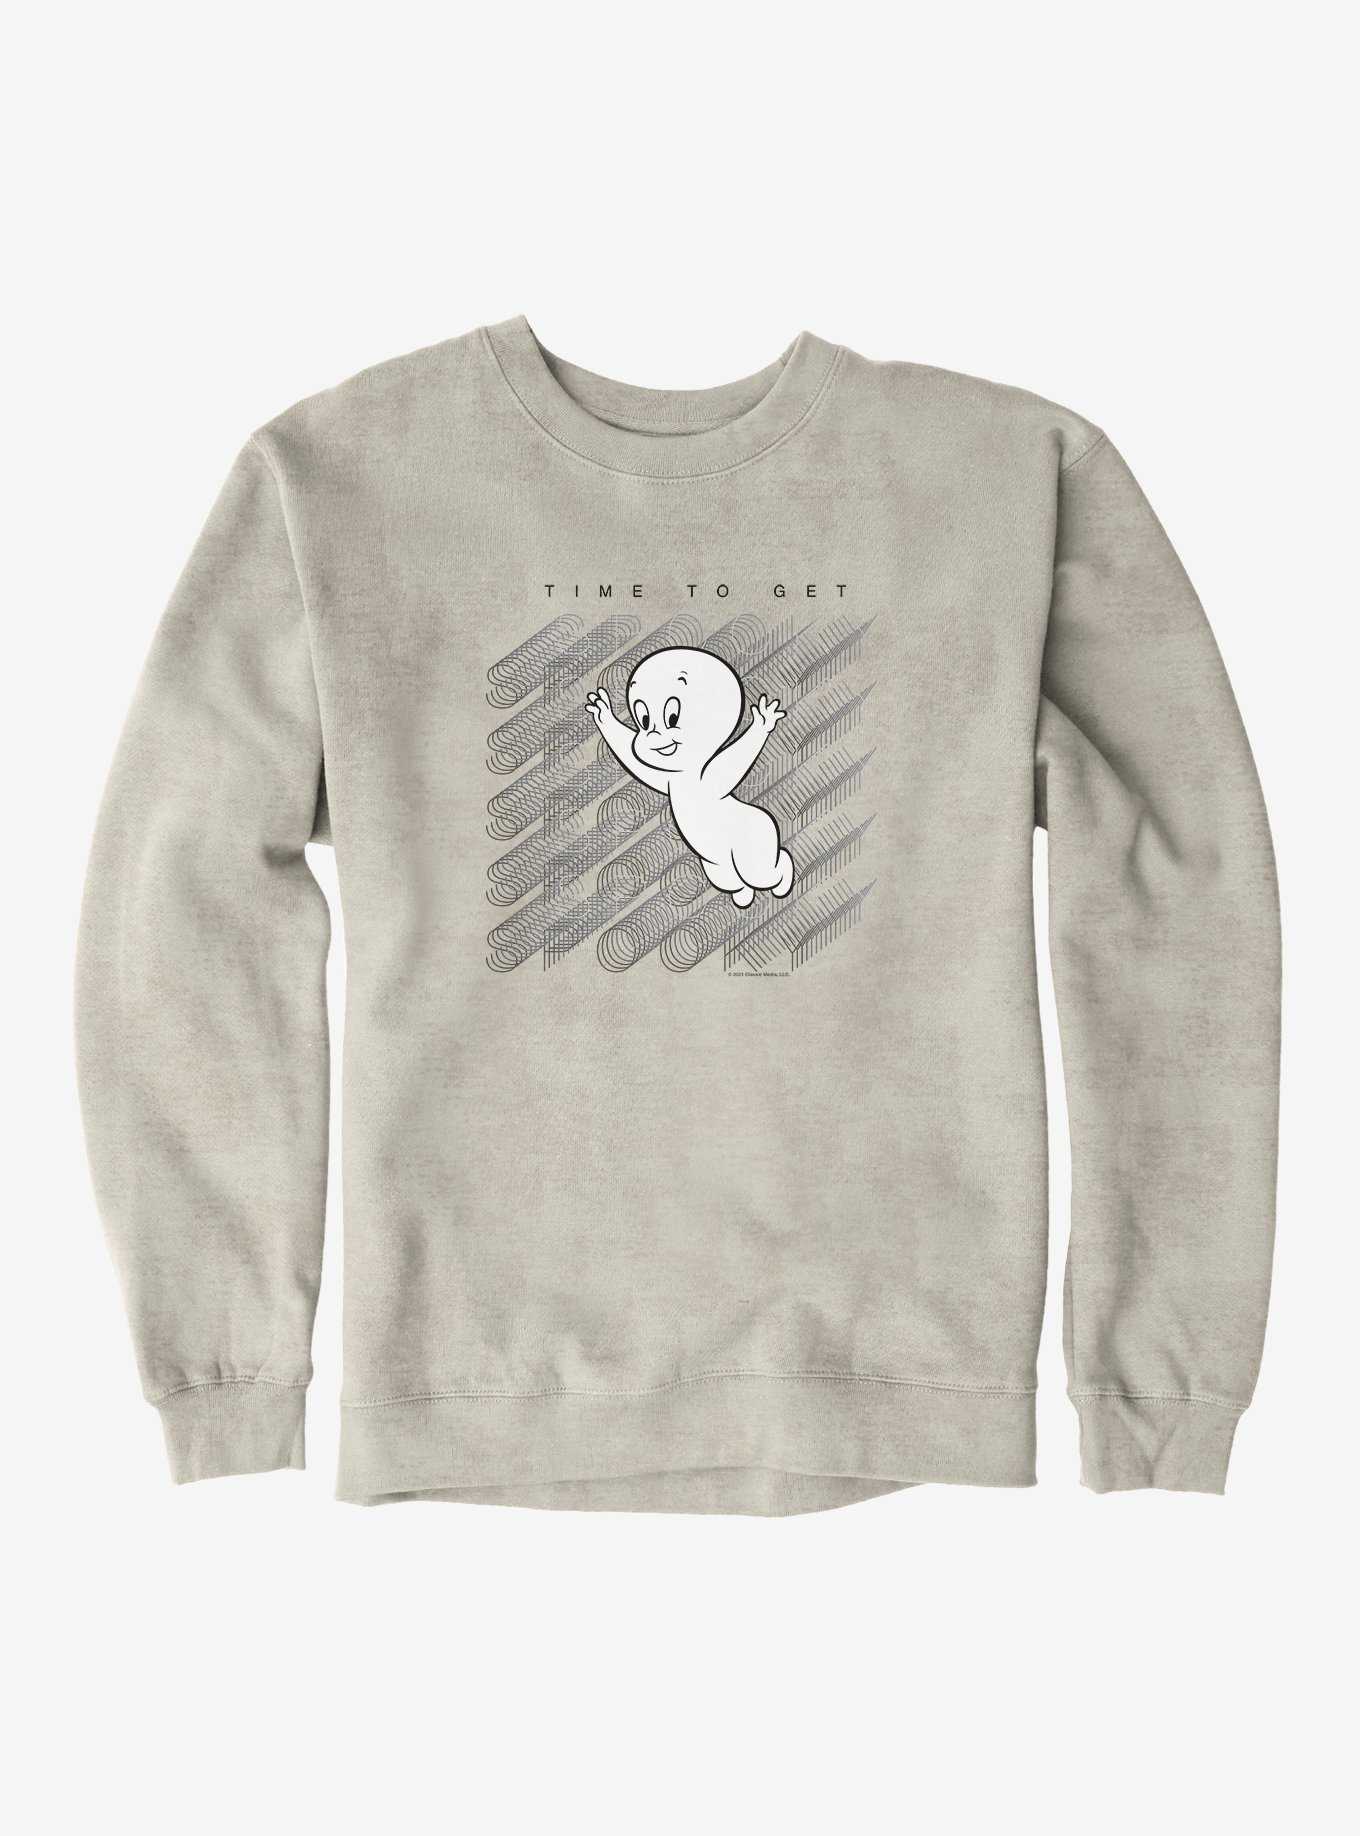 Casper The Friendly Ghost Virtual Raver Spooky Time Sweatshirt, , hi-res